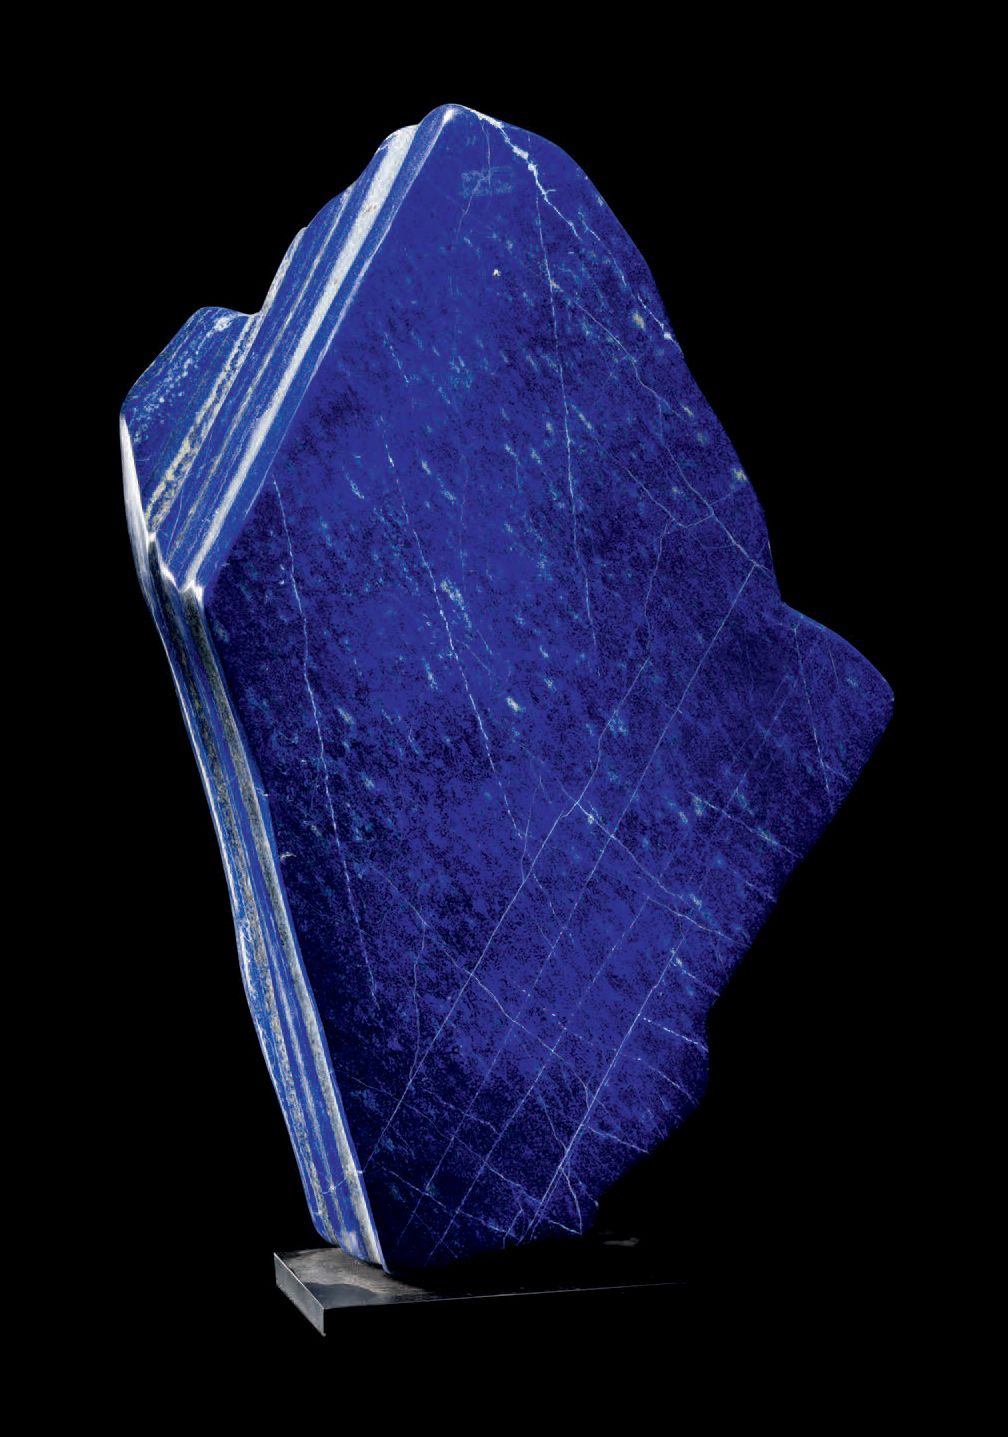 Null BLOQUE DE LAZULI LAPIS AZUL PROFUNDO EN SOCLE
H. 43 cm - W. 26 cm
El lapisl&hellip;